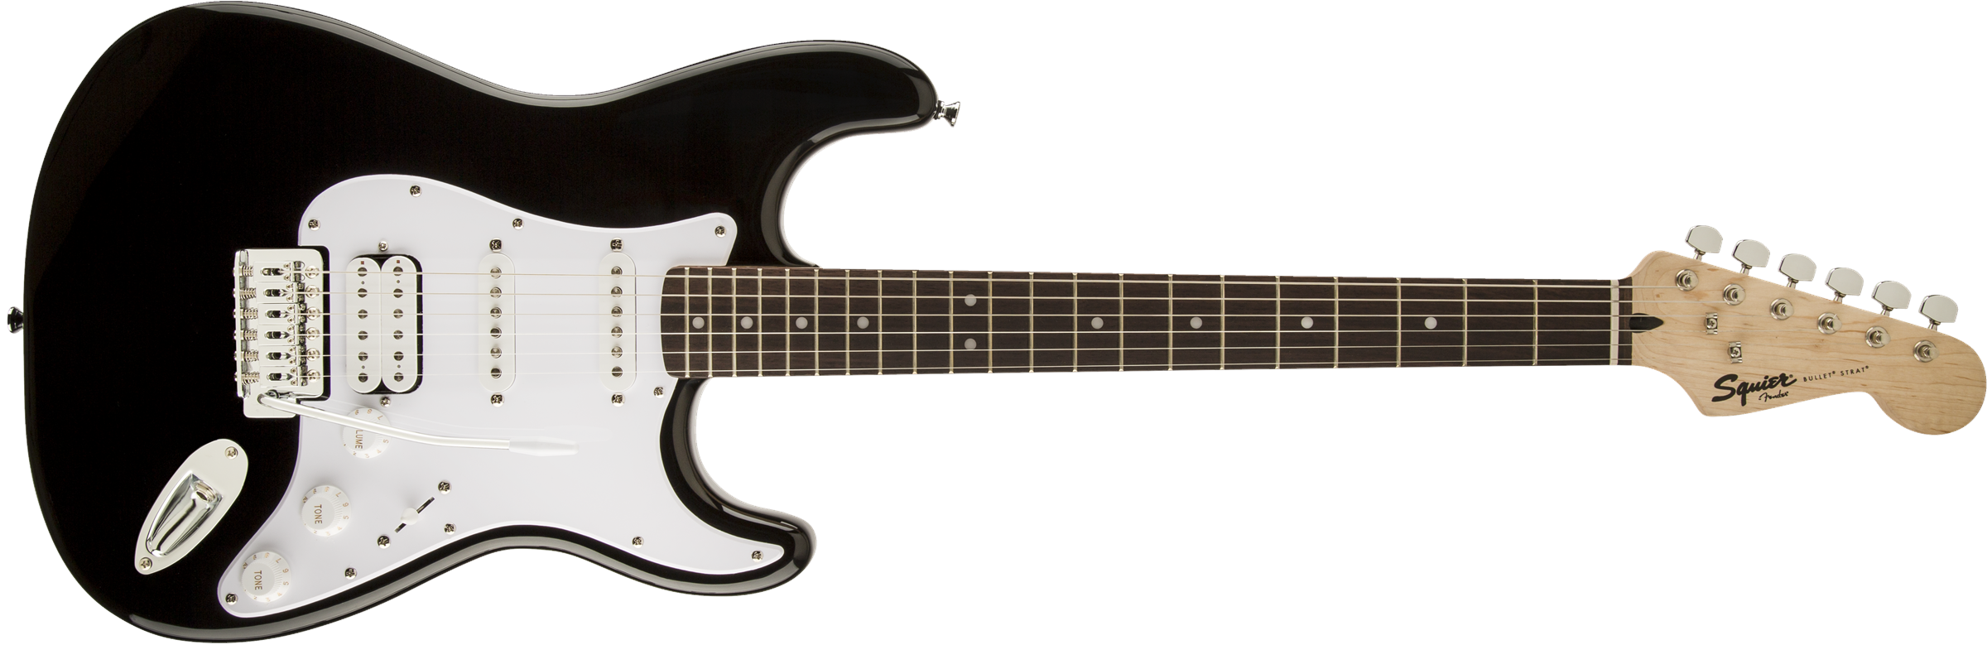 Squier By Fender - Bullet HSS Stratocaster - Elektrisk Guitar (Black)